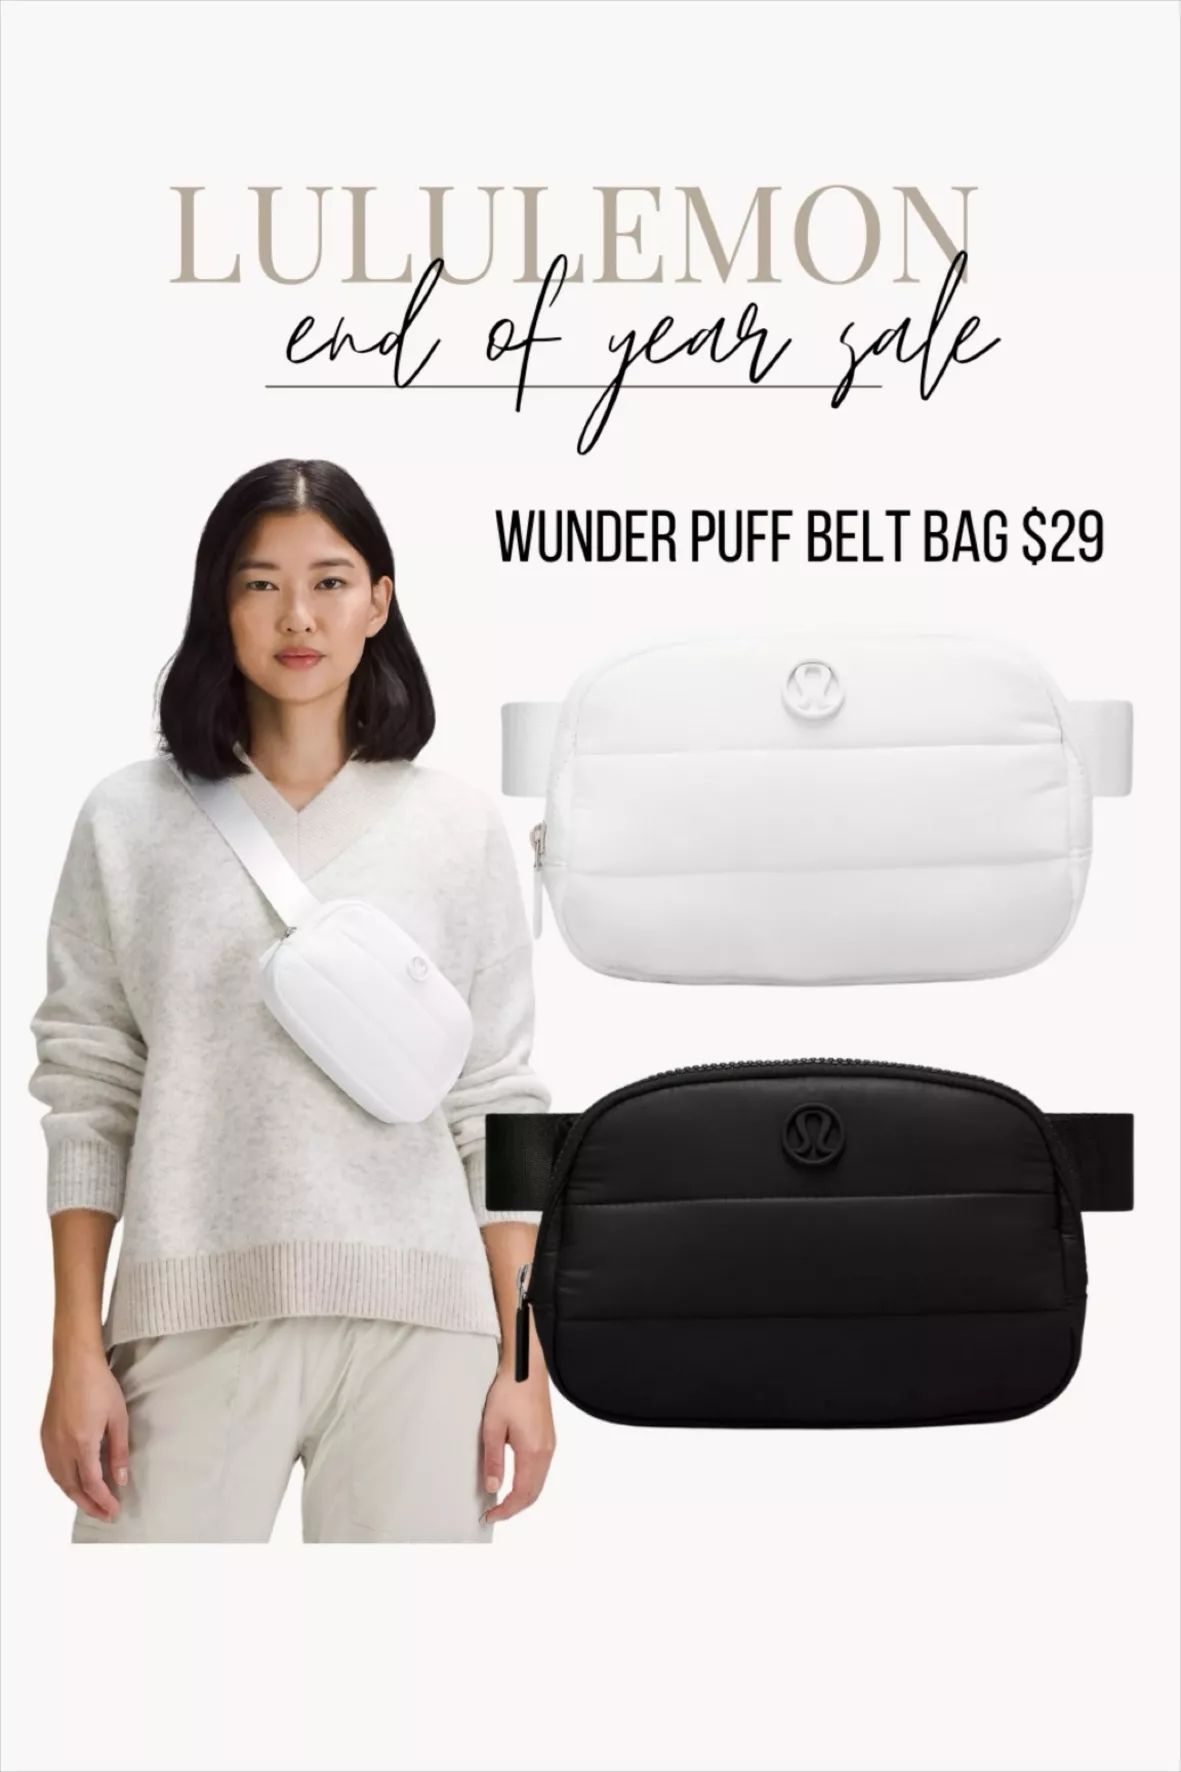 Lululemon Belt Bags Are Starting at $29